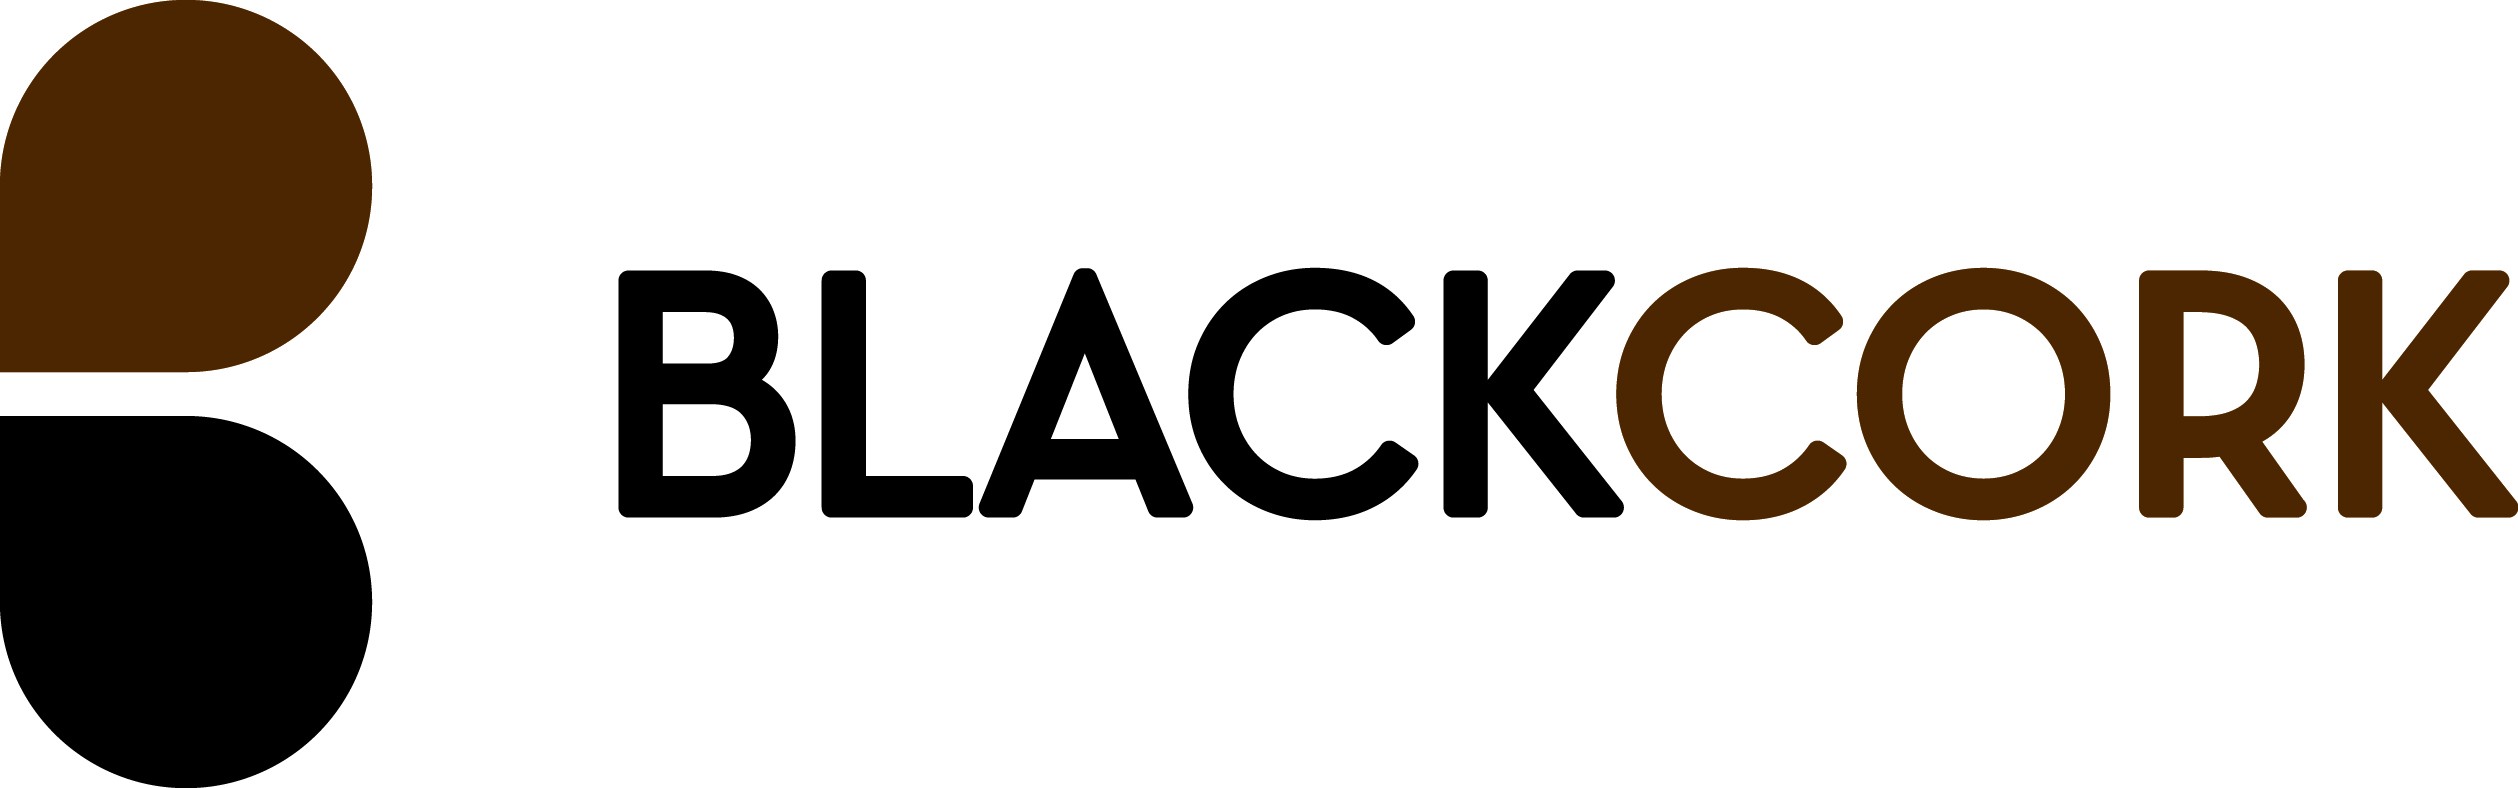 BLACKCORK